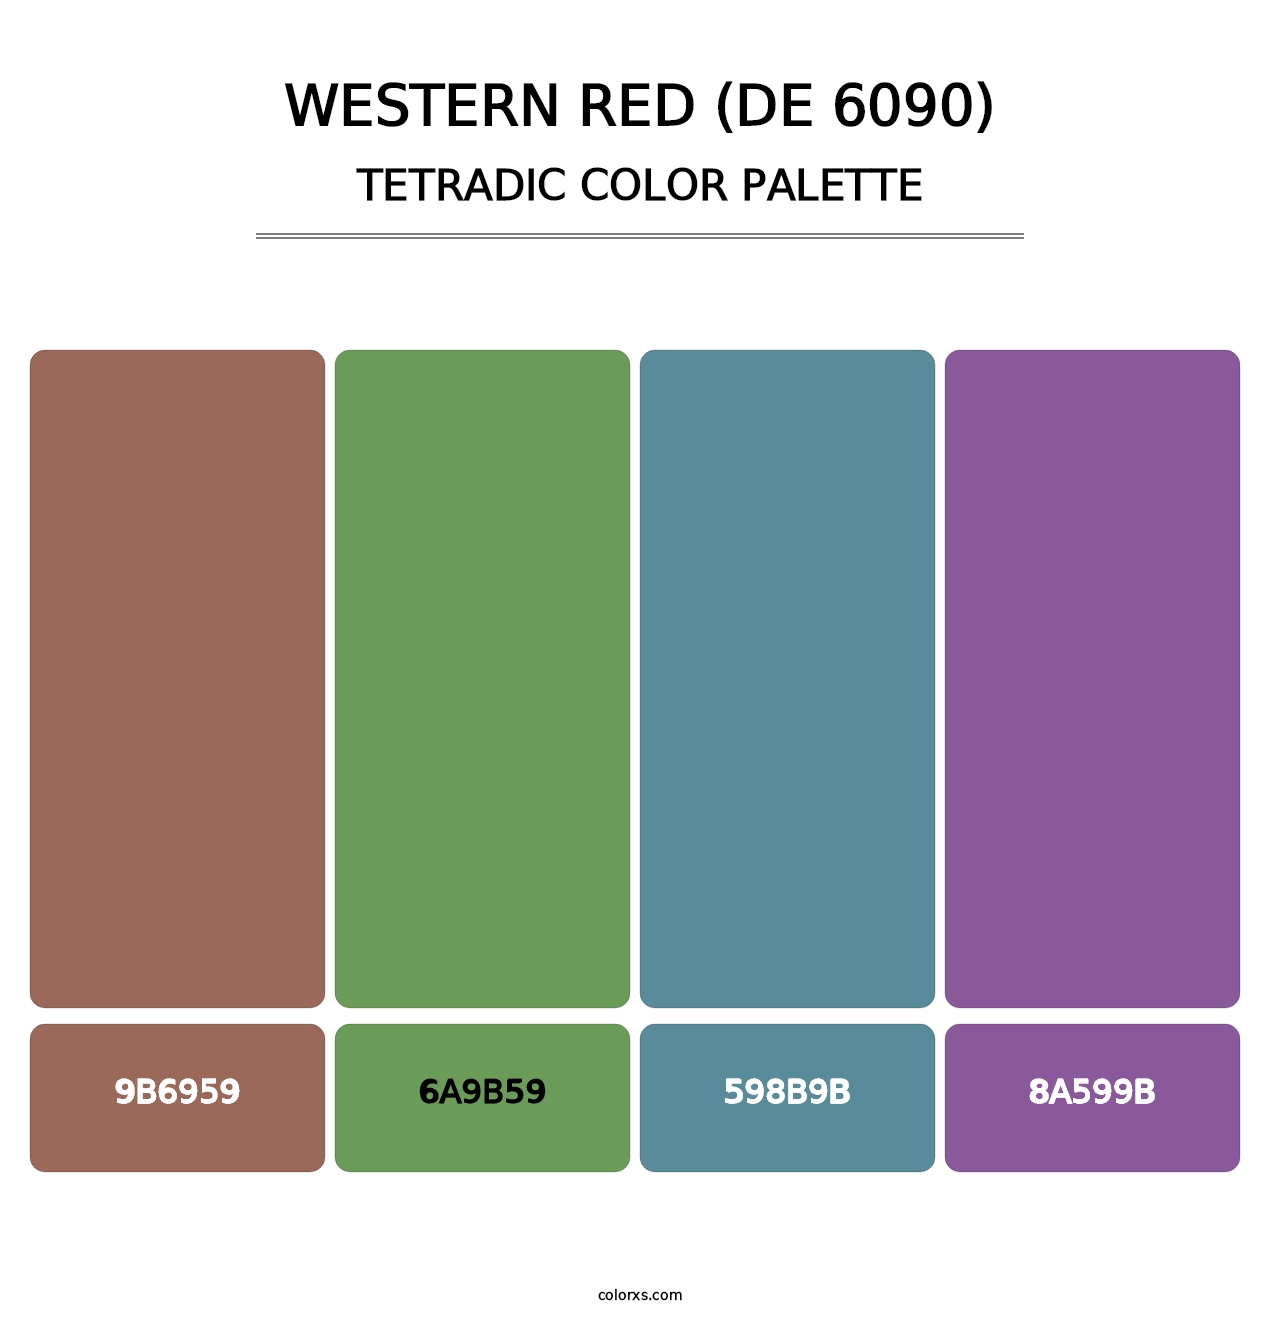 Western Red (DE 6090) - Tetradic Color Palette